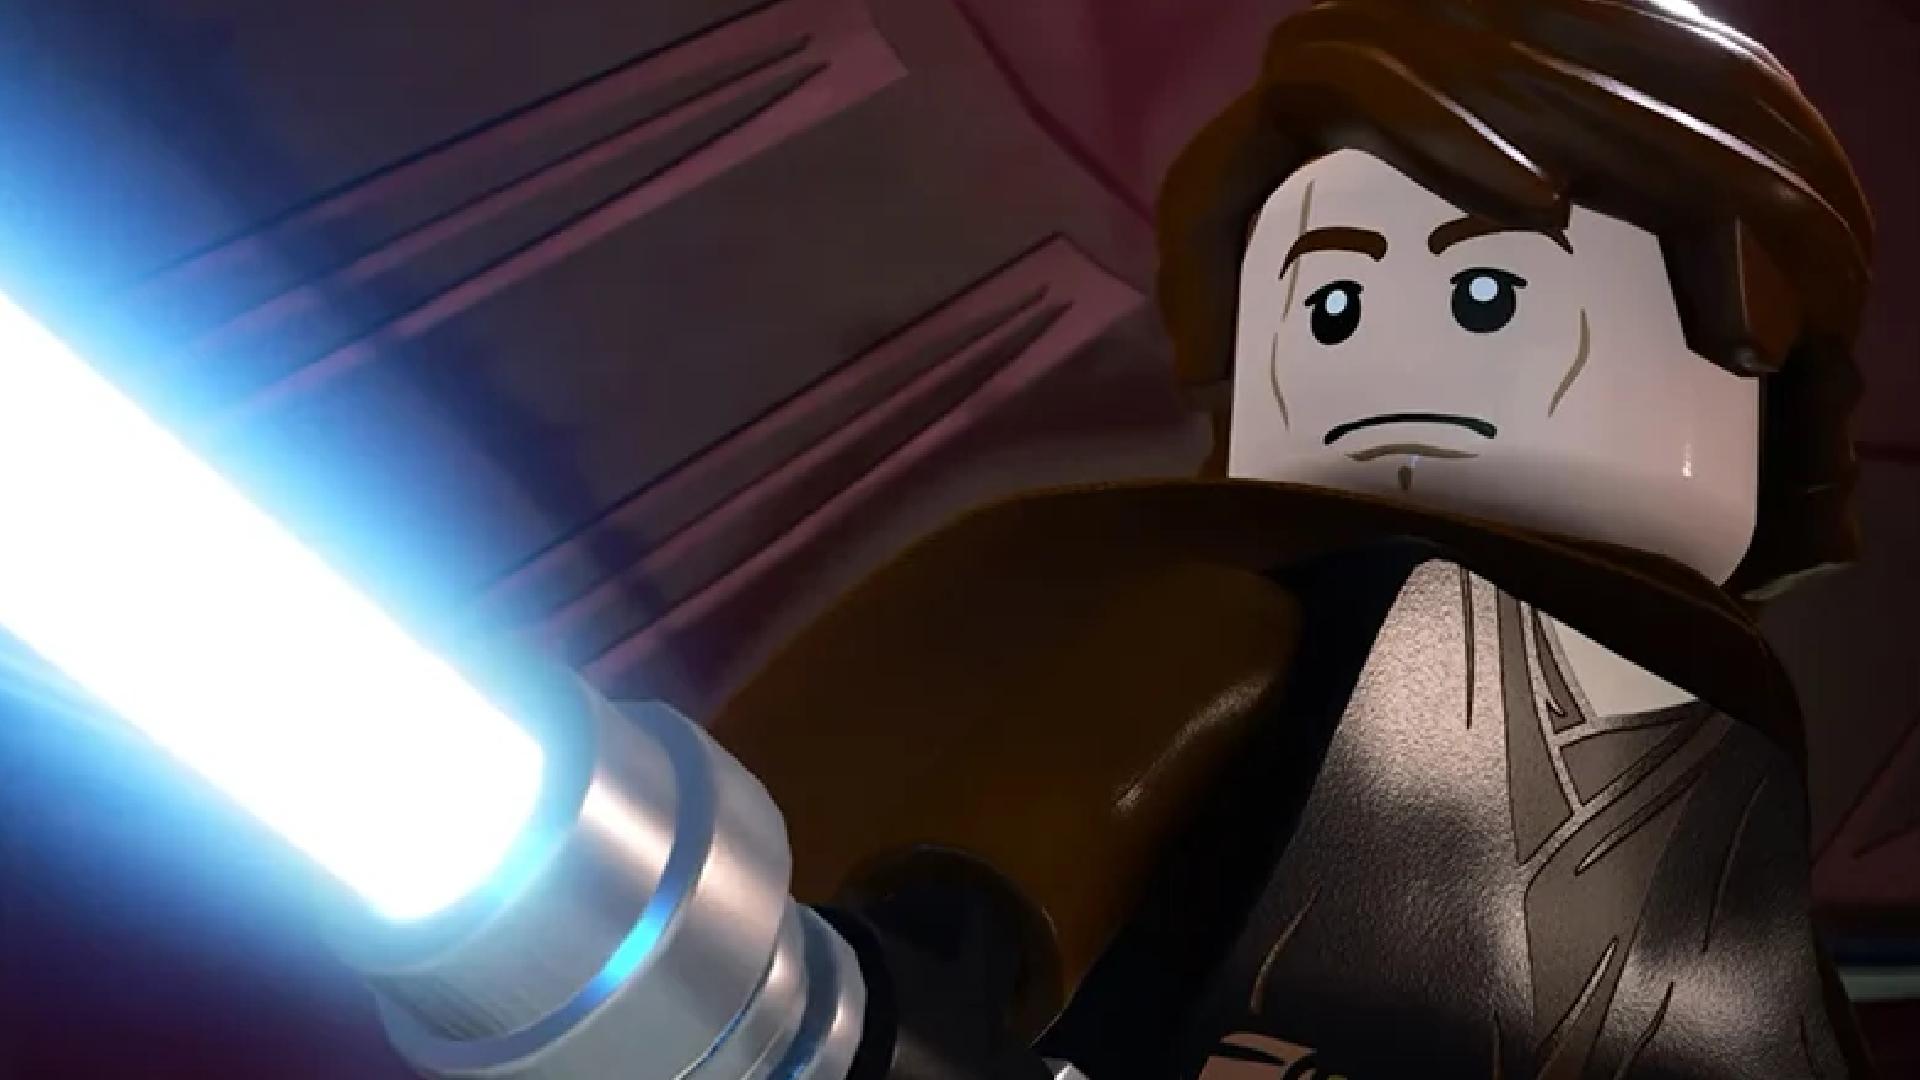 LEGO Star Wars The Skywalker Saga Cheat Codes